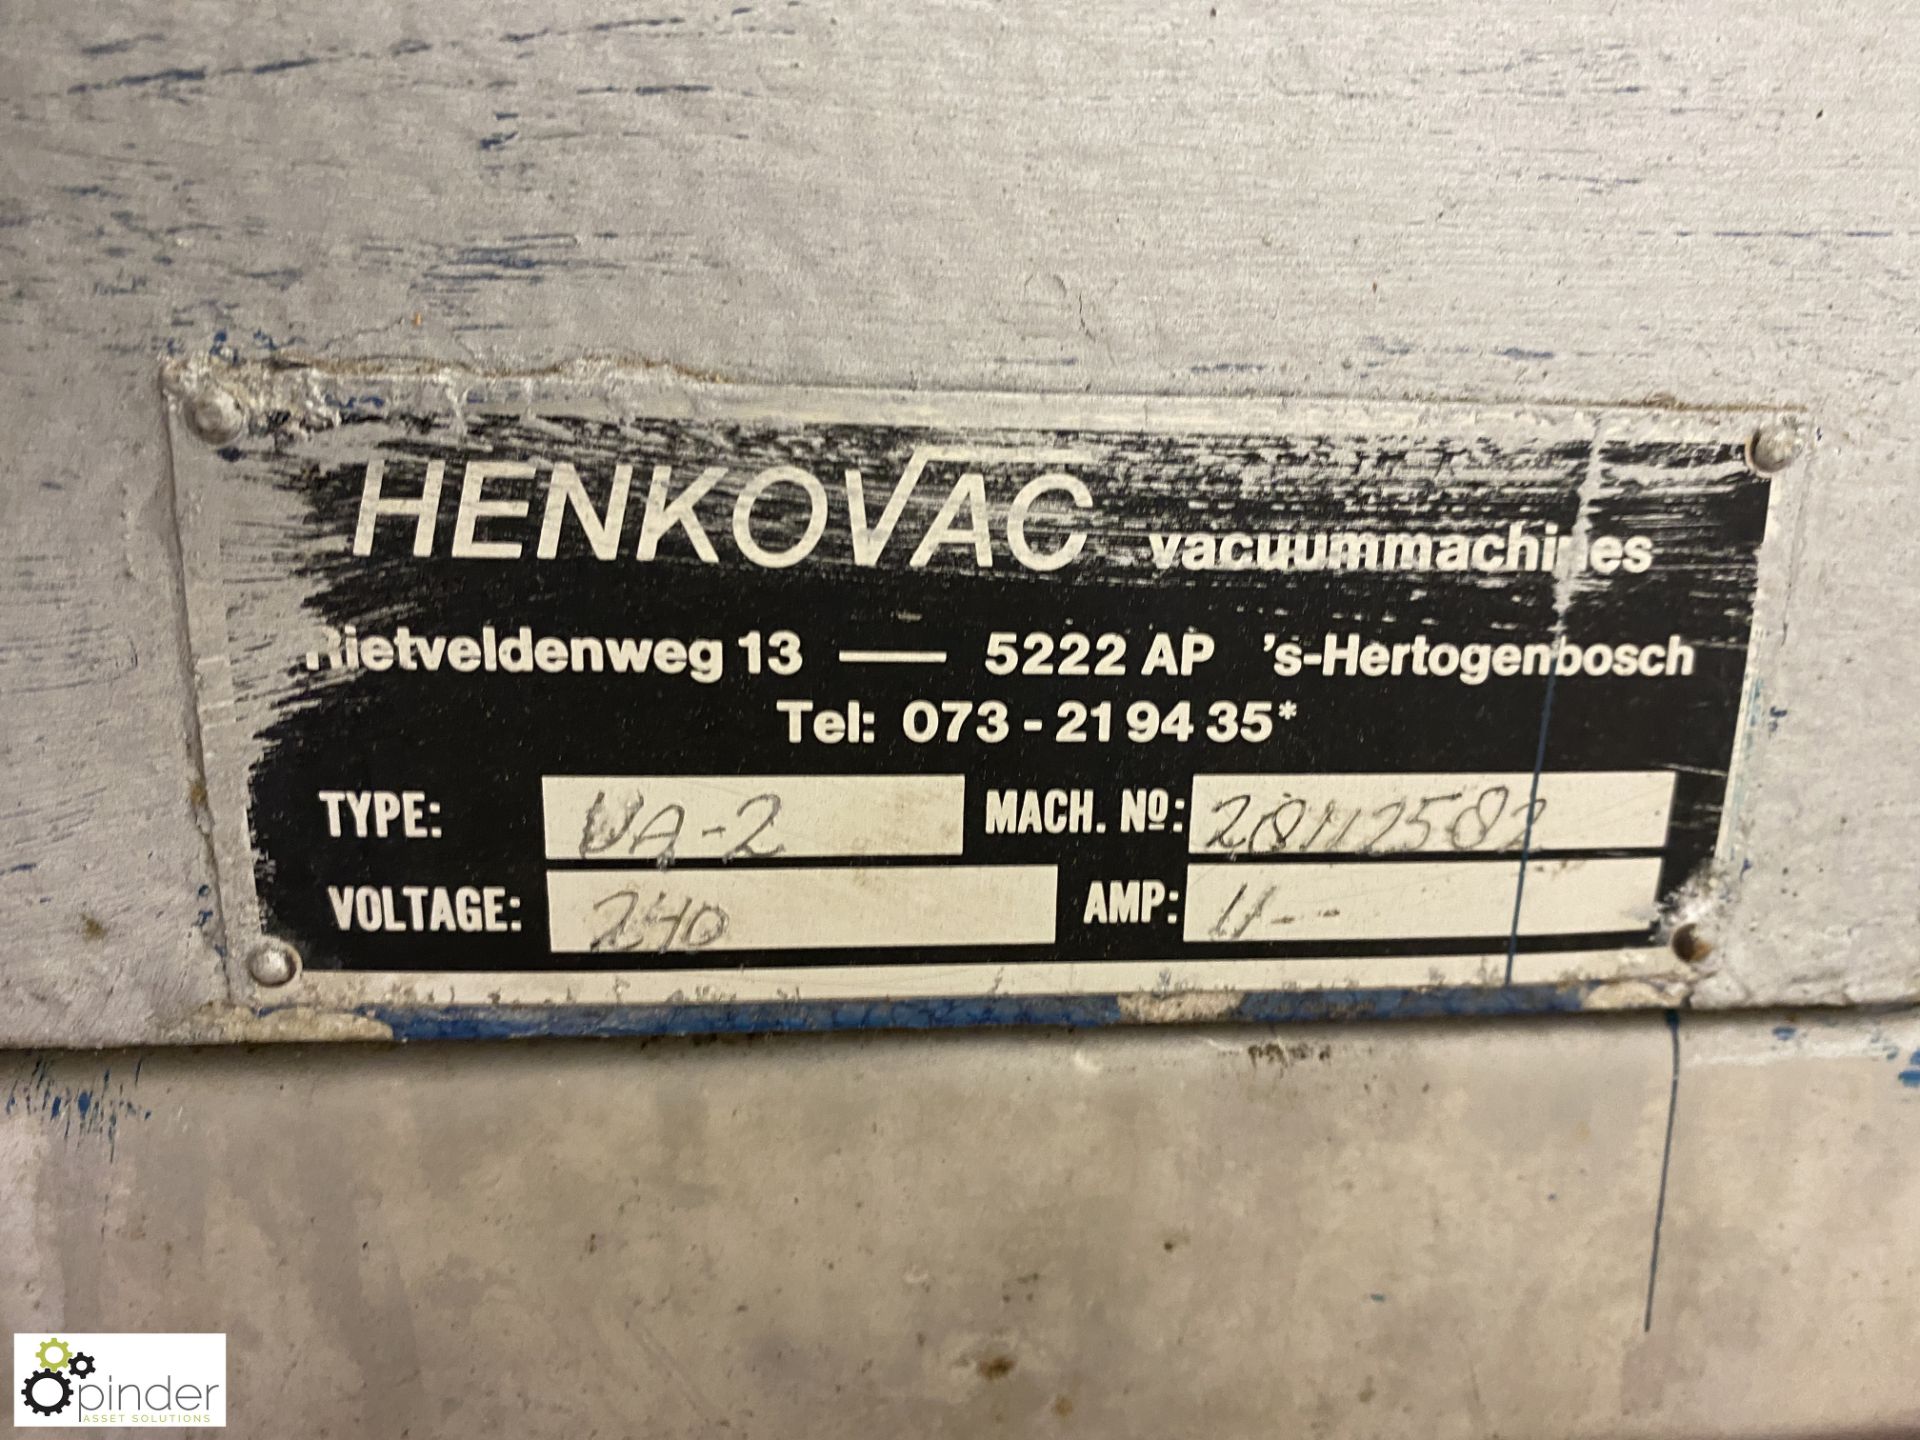 Henko Vac VA2 Vacuum Packer, 240volts (Lift Out Fee: £30 plus VAT) - Image 4 of 5